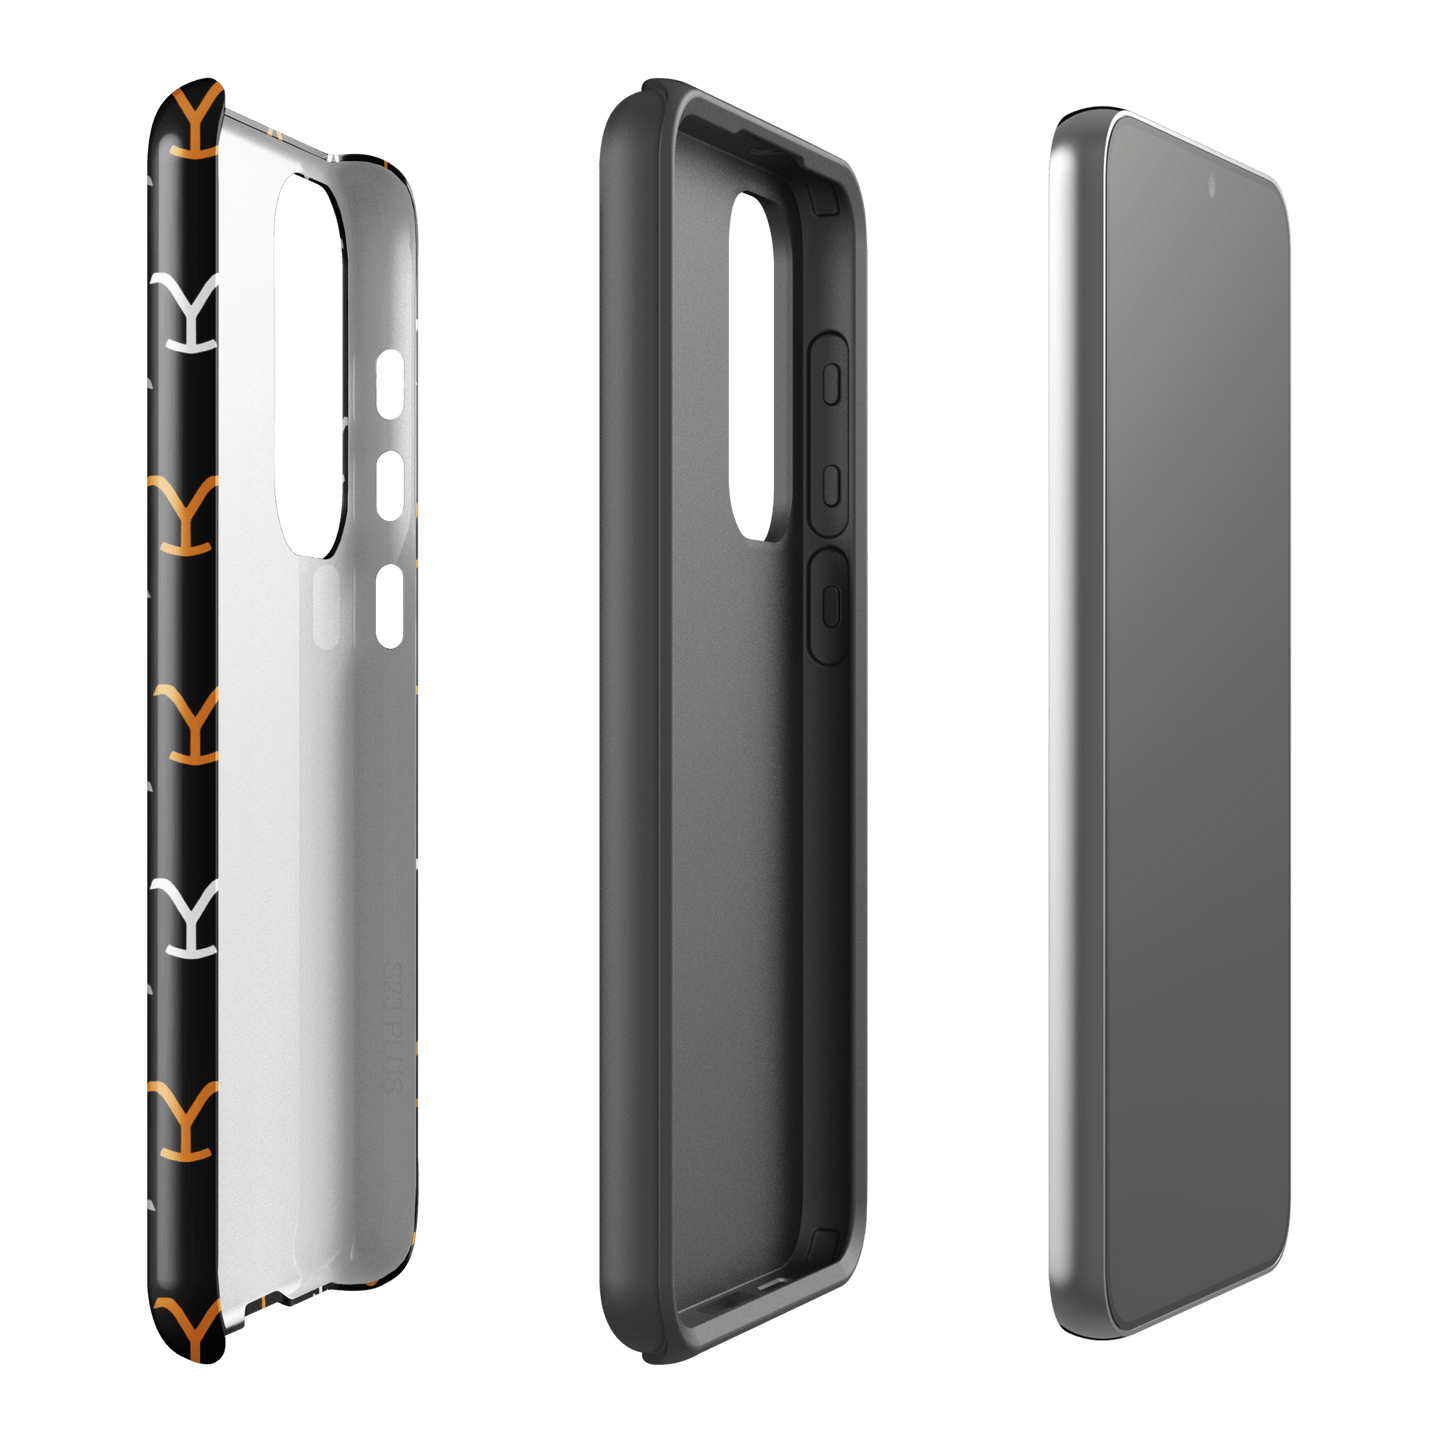 Yellowstone Y Pattern Tough Phone Case - Samsung - Paramount Shop